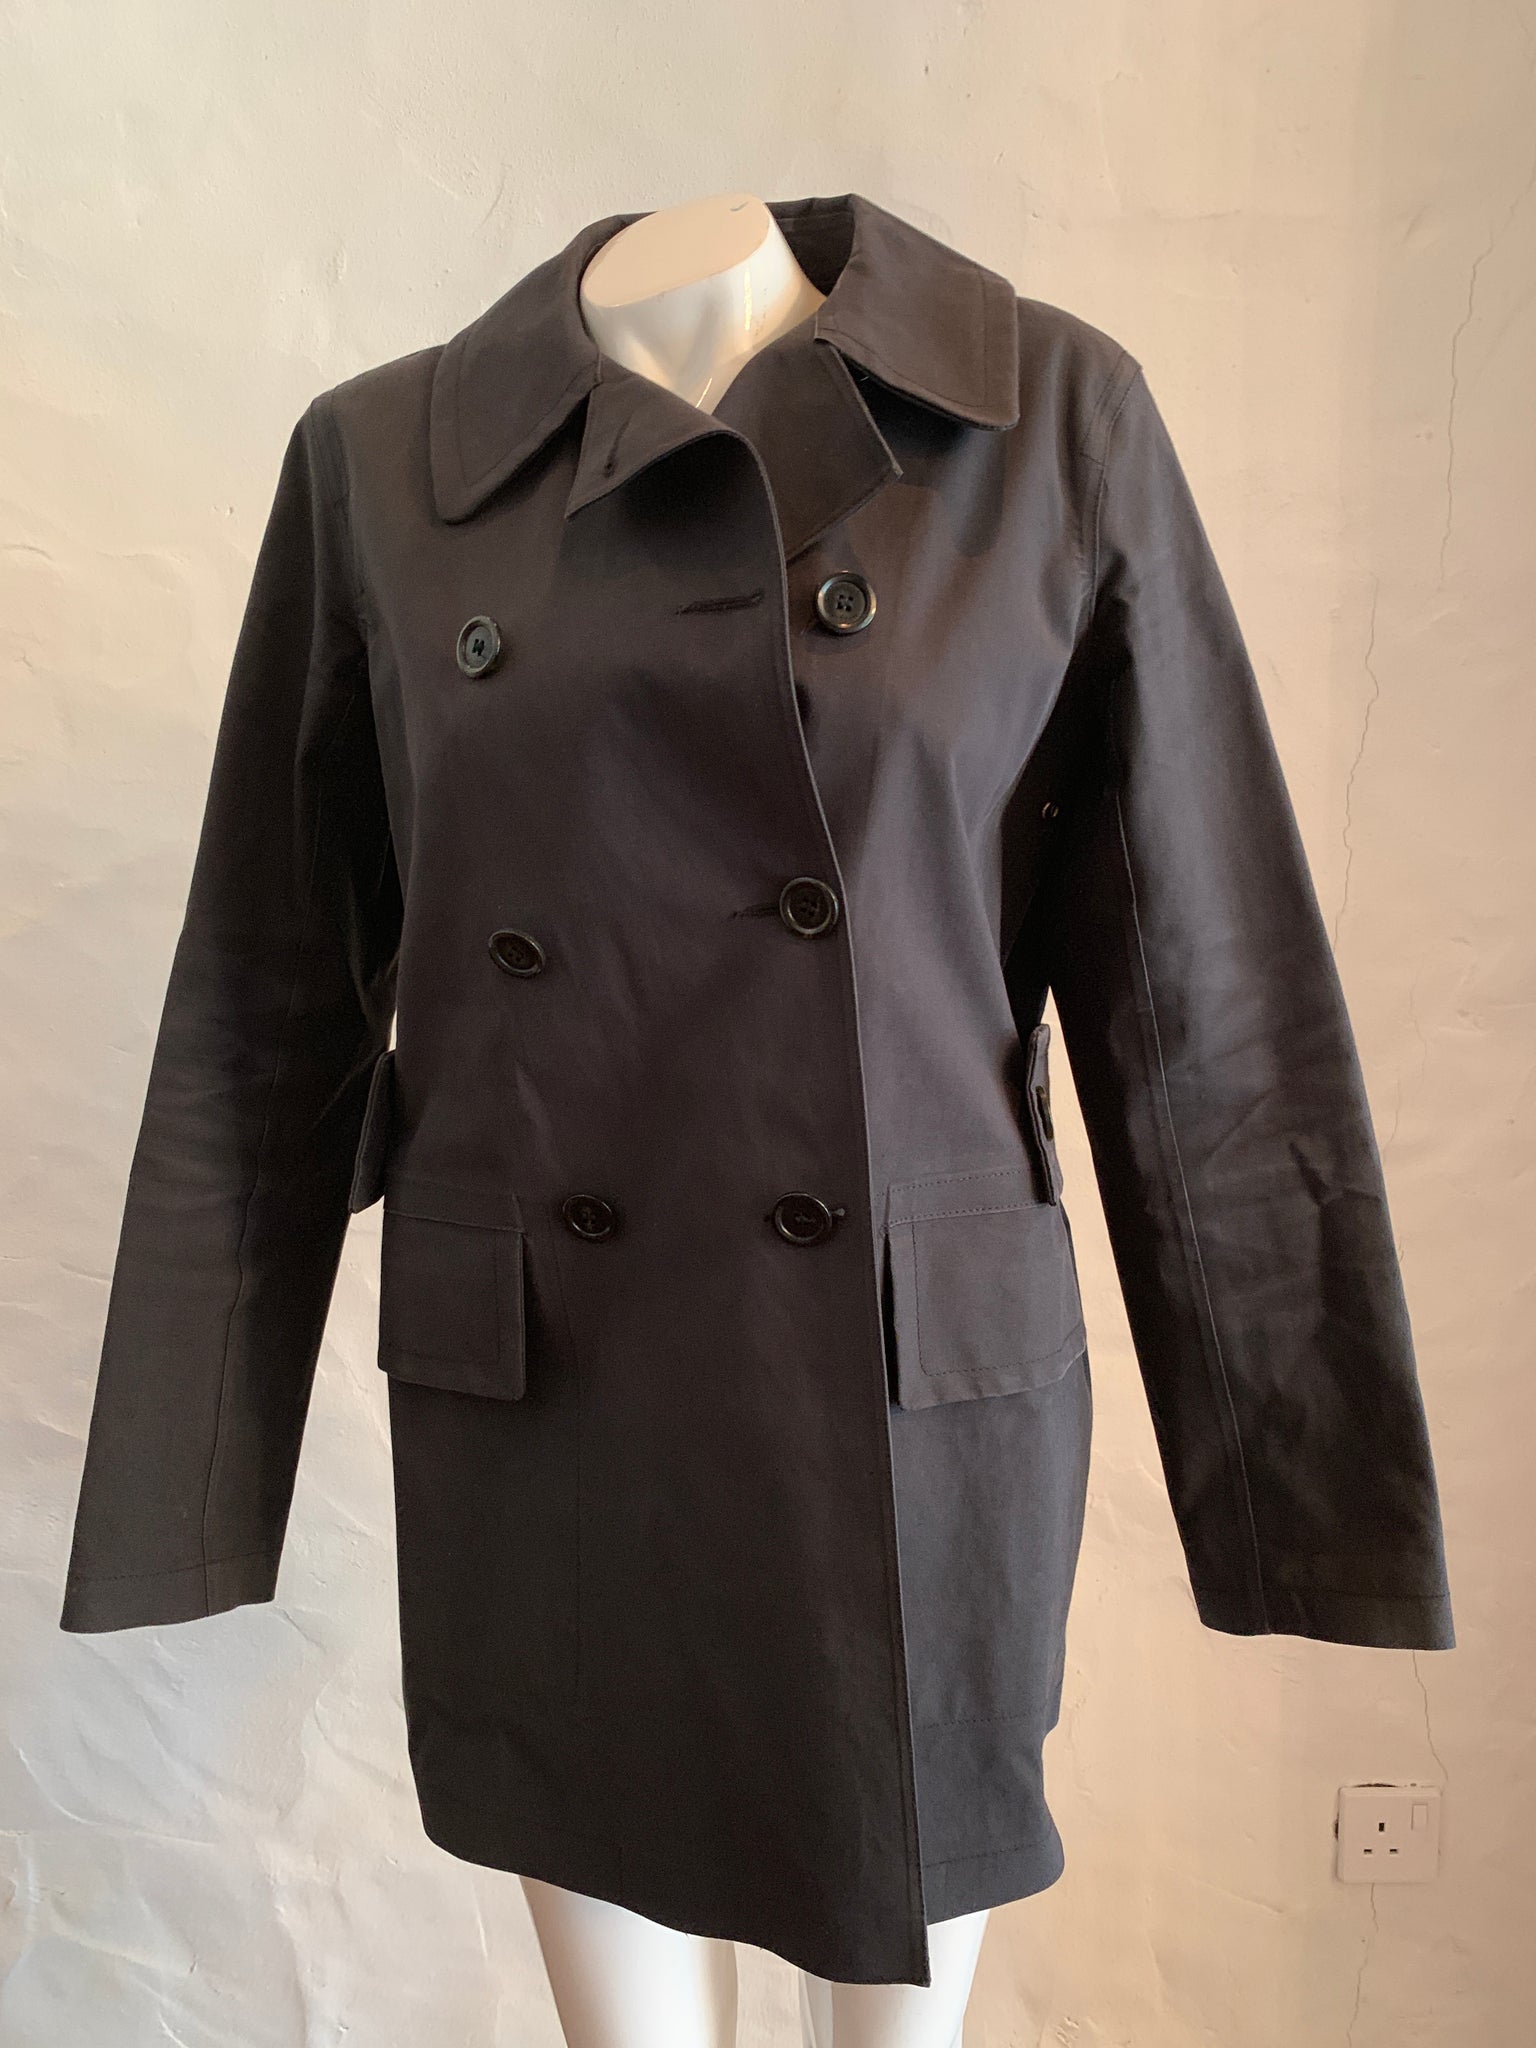 LOUIS VUITTON Mackintosh Raincoat in Beige Cotton Size 42 at